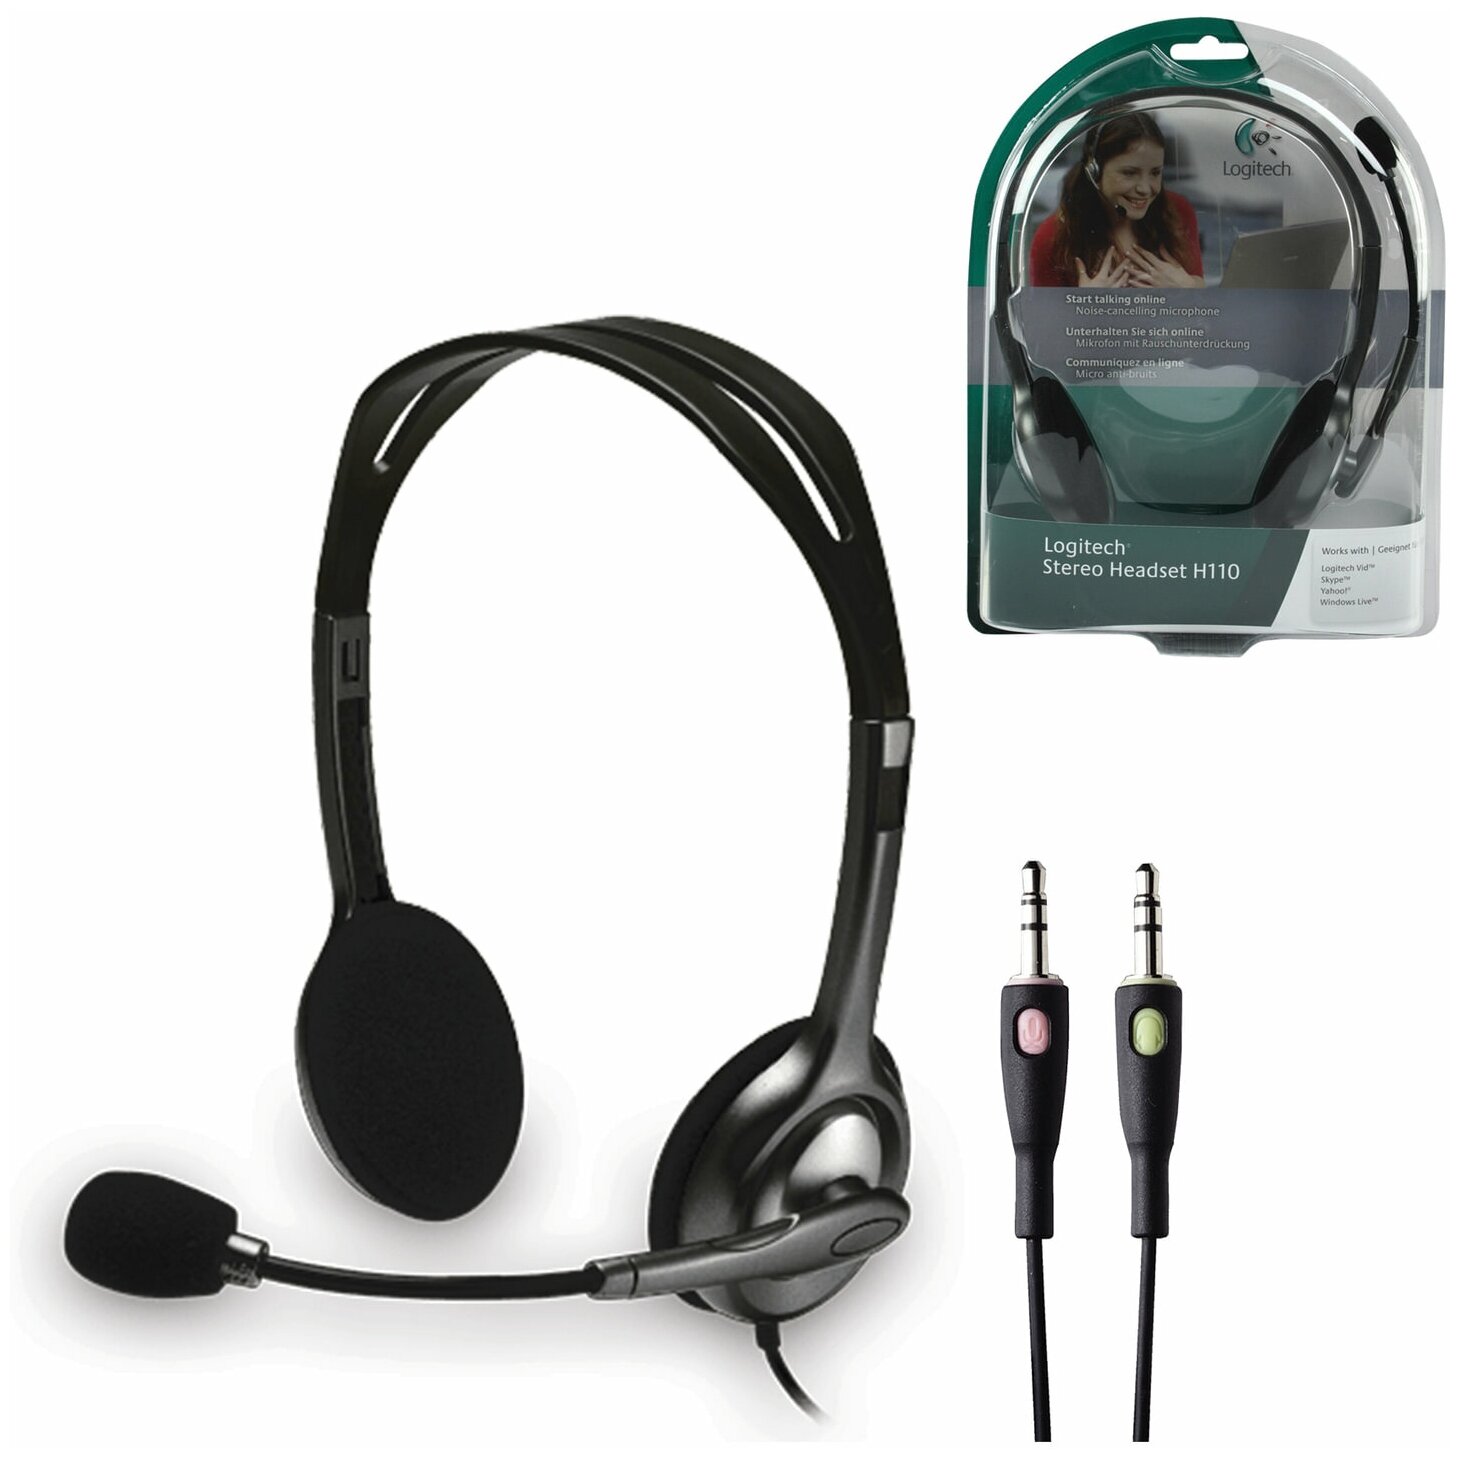 Гарнитура/ Headset Logitech H110 (20-20000Hz, mic, 2x3.5mm jack, 1.8m)